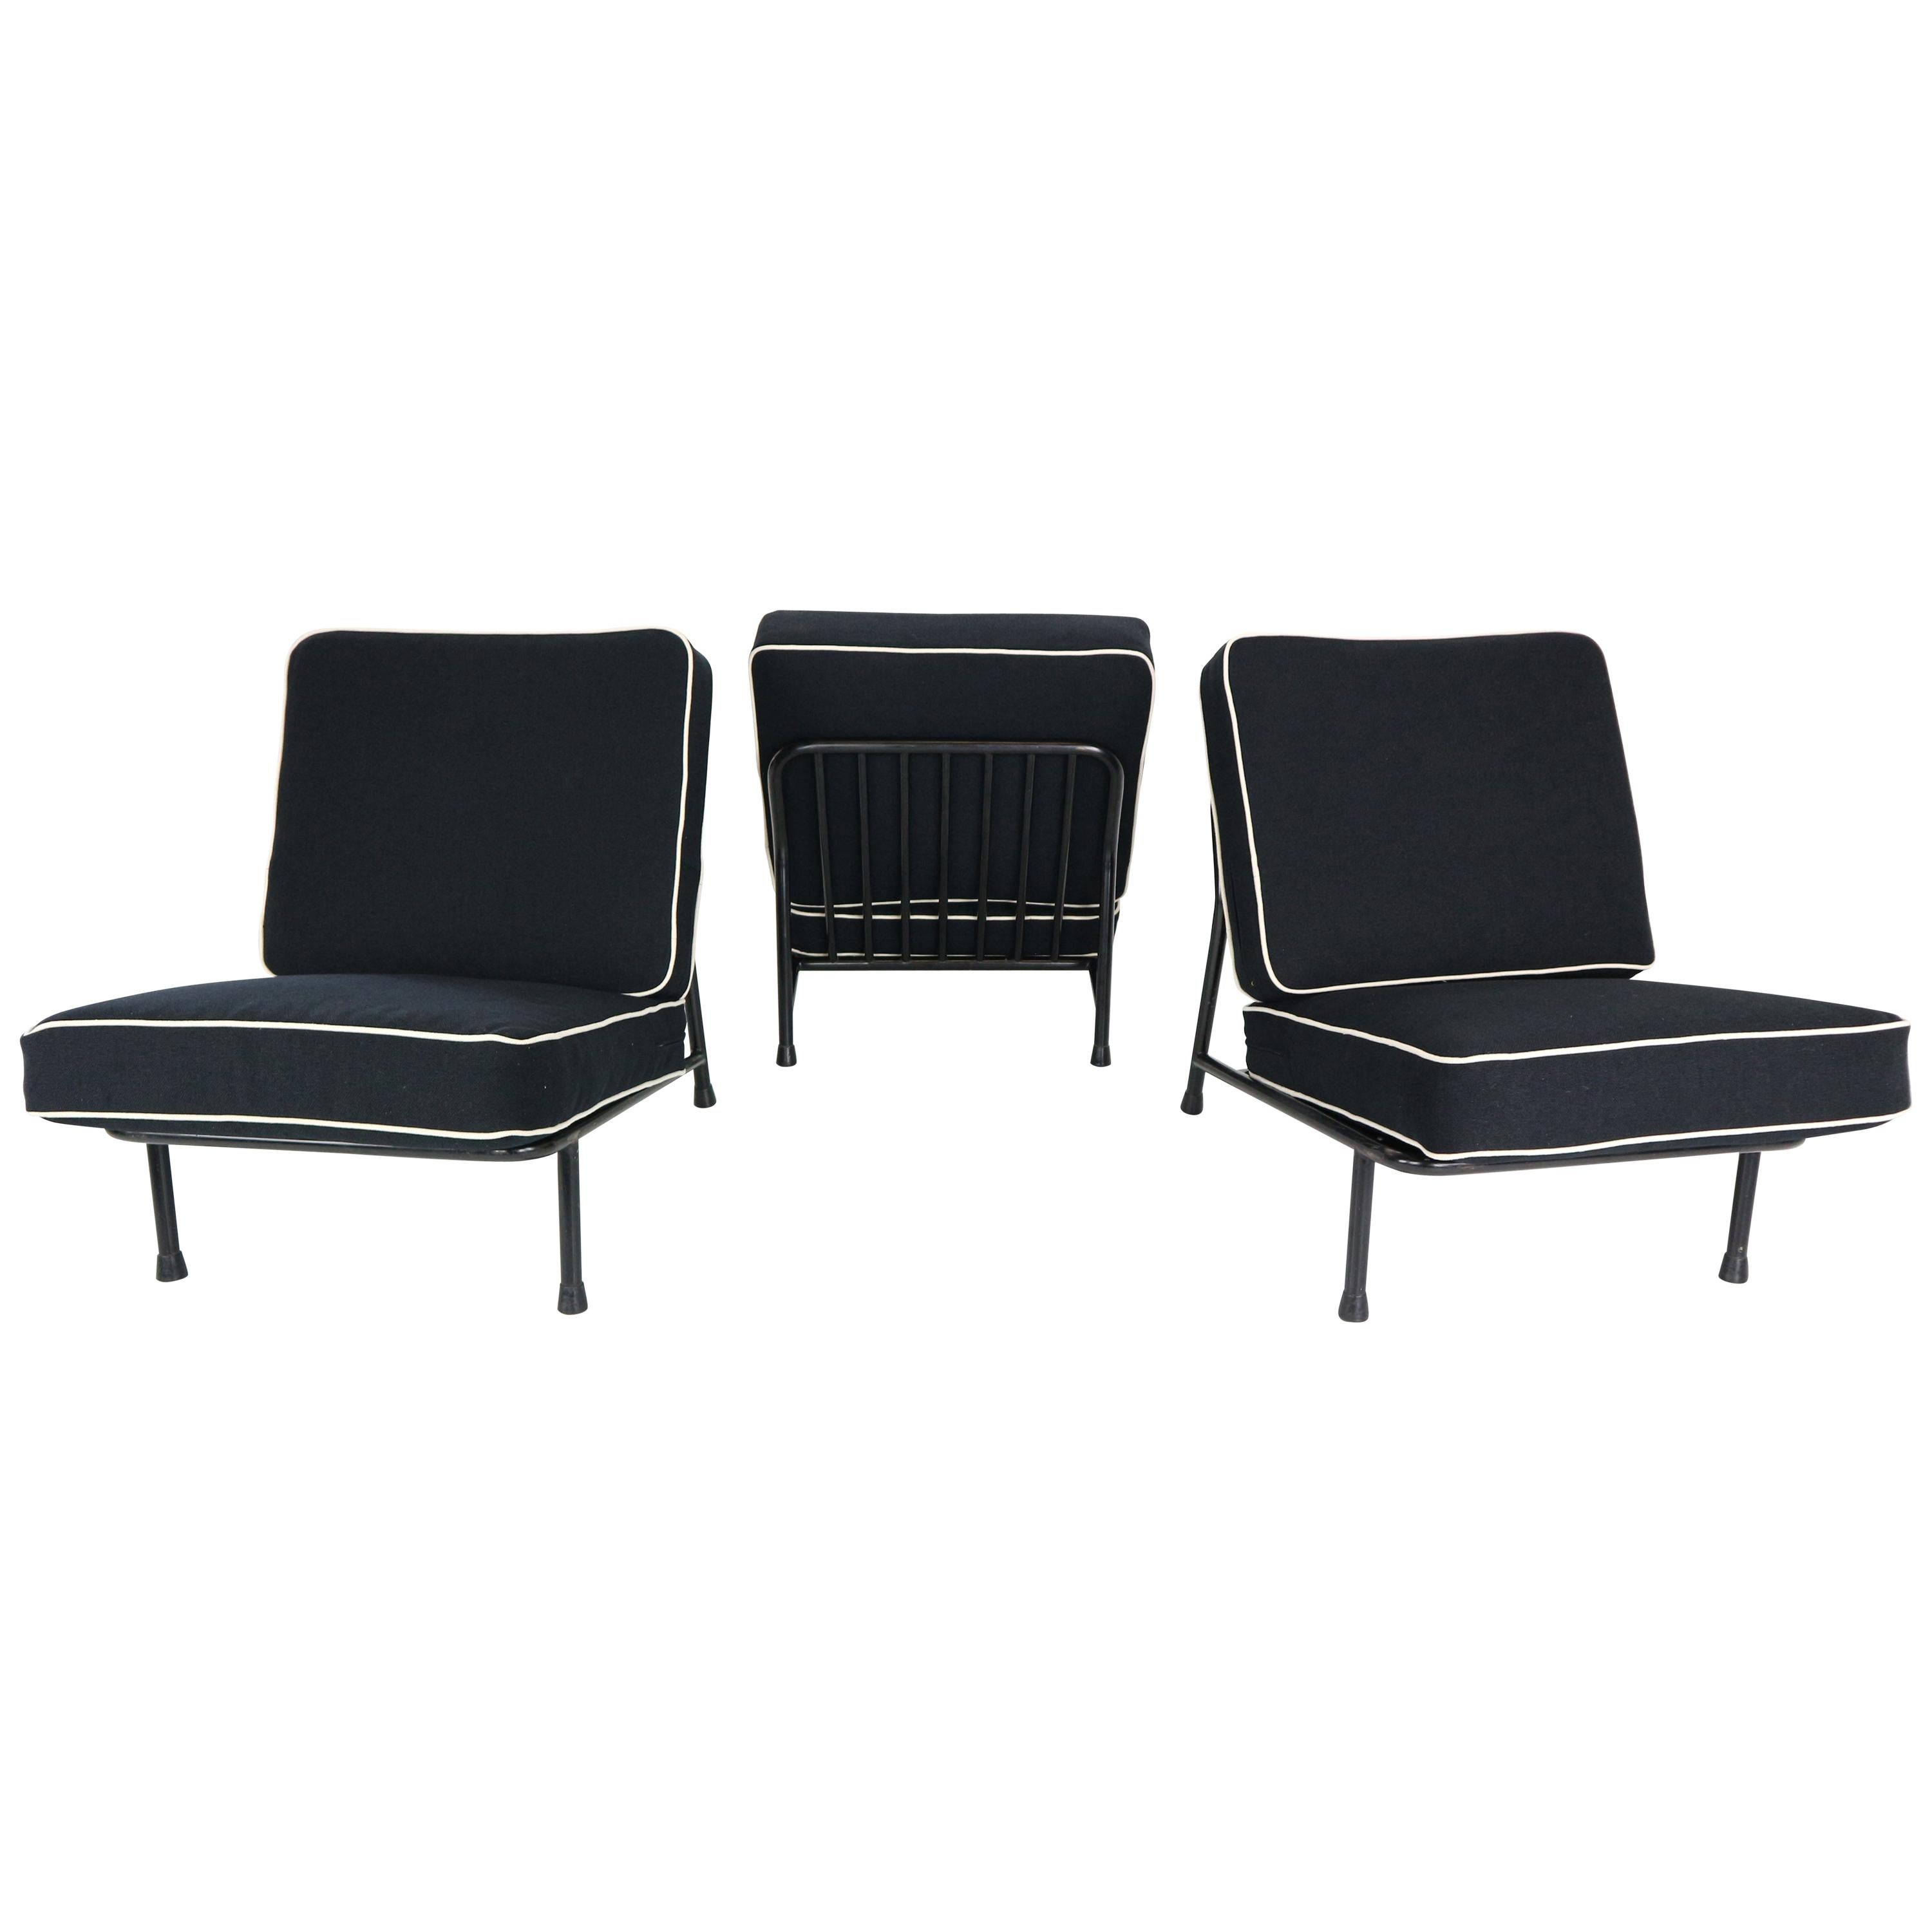 Alf Svensson ‘013’ Set of 3 Easy Chairs for DUX Artifort, 1950s